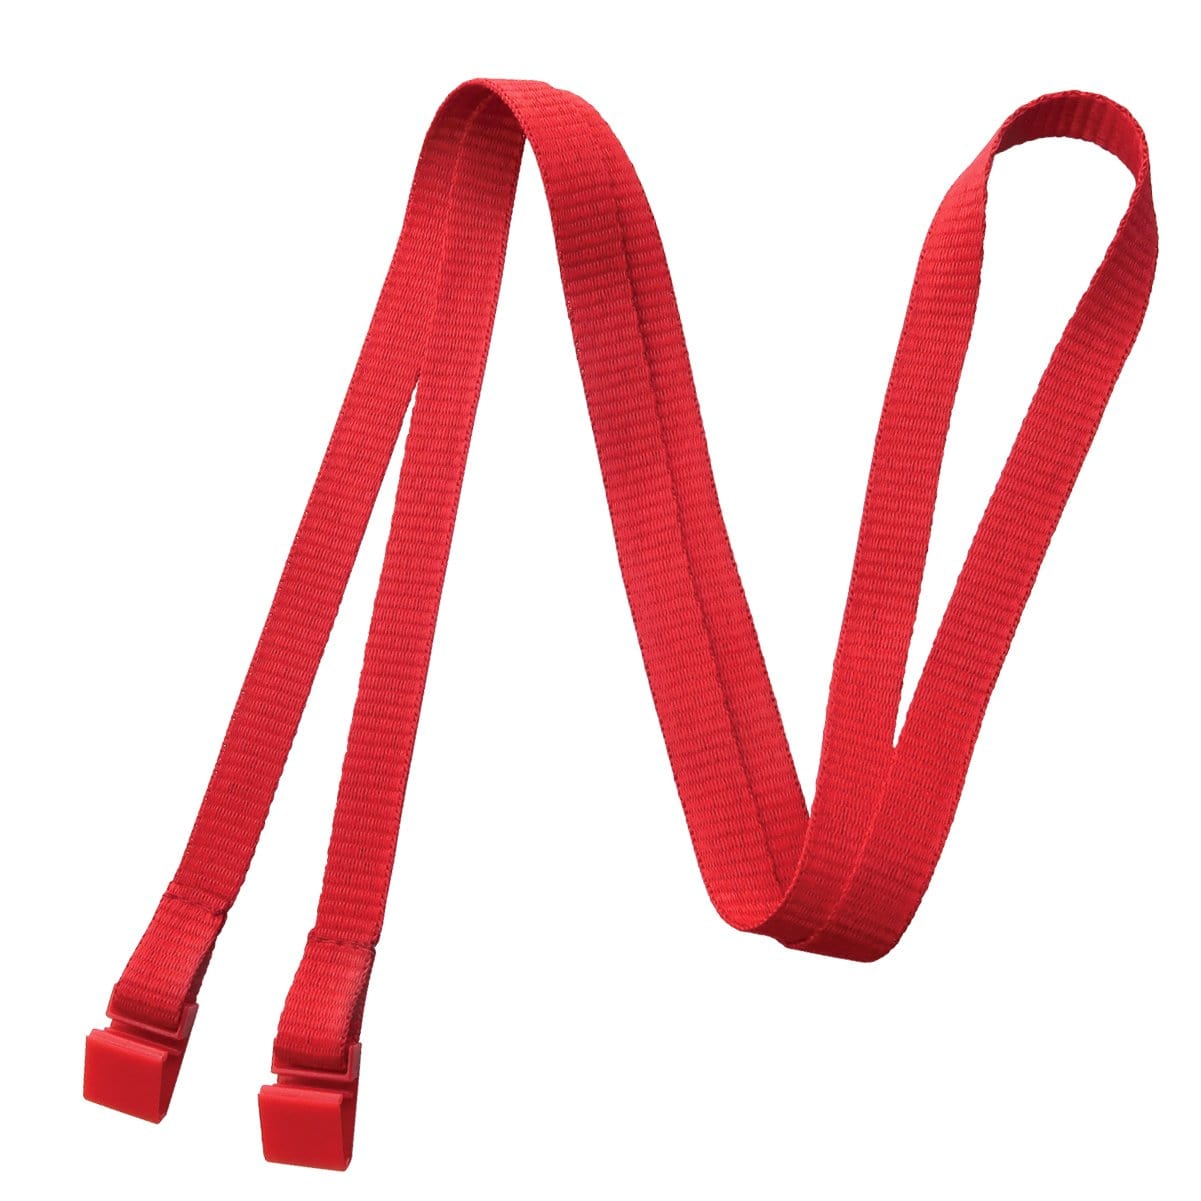 Plastic Hooks,mask Lanyard Clip,strap Snap Hook Plastic Clasp